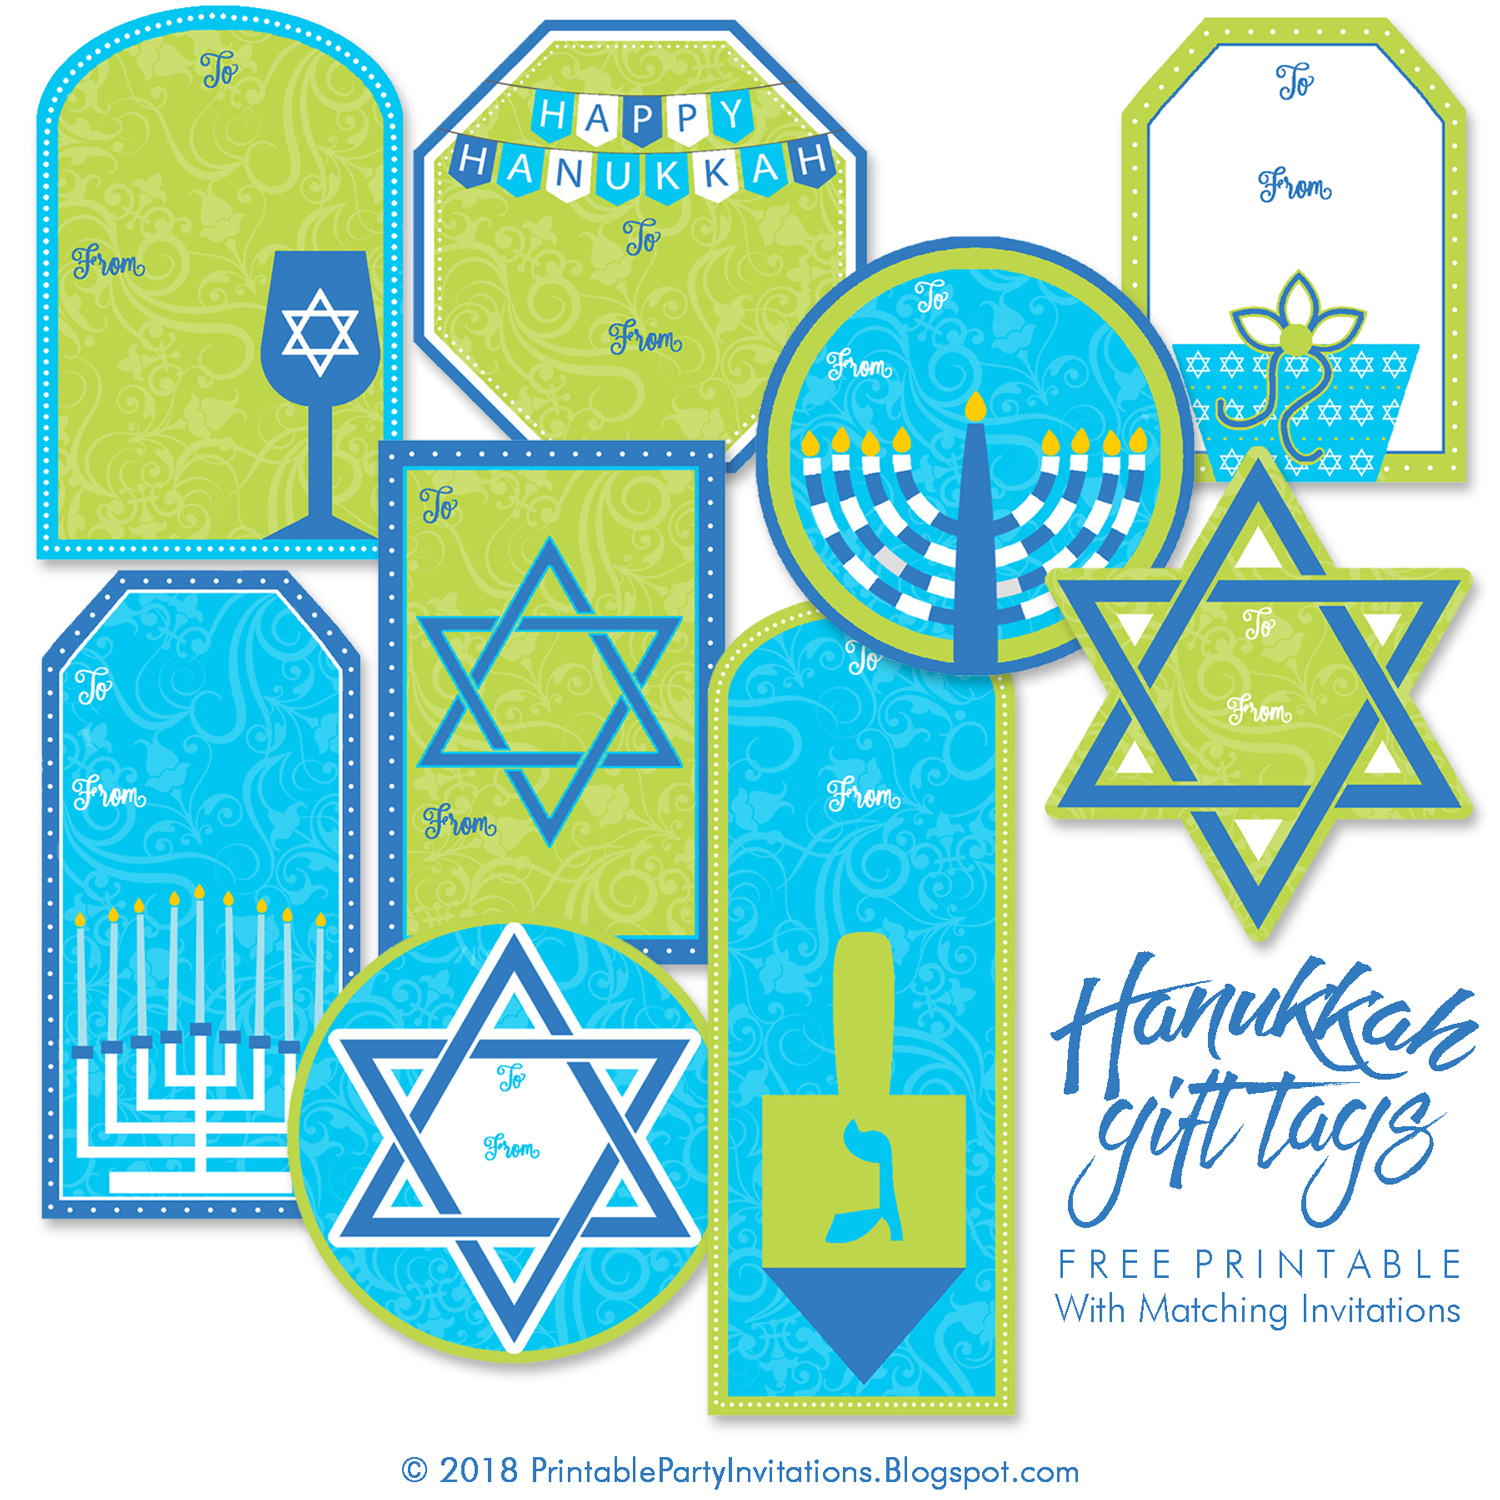 10-diy-free-printable-hanukkah-gift-tags